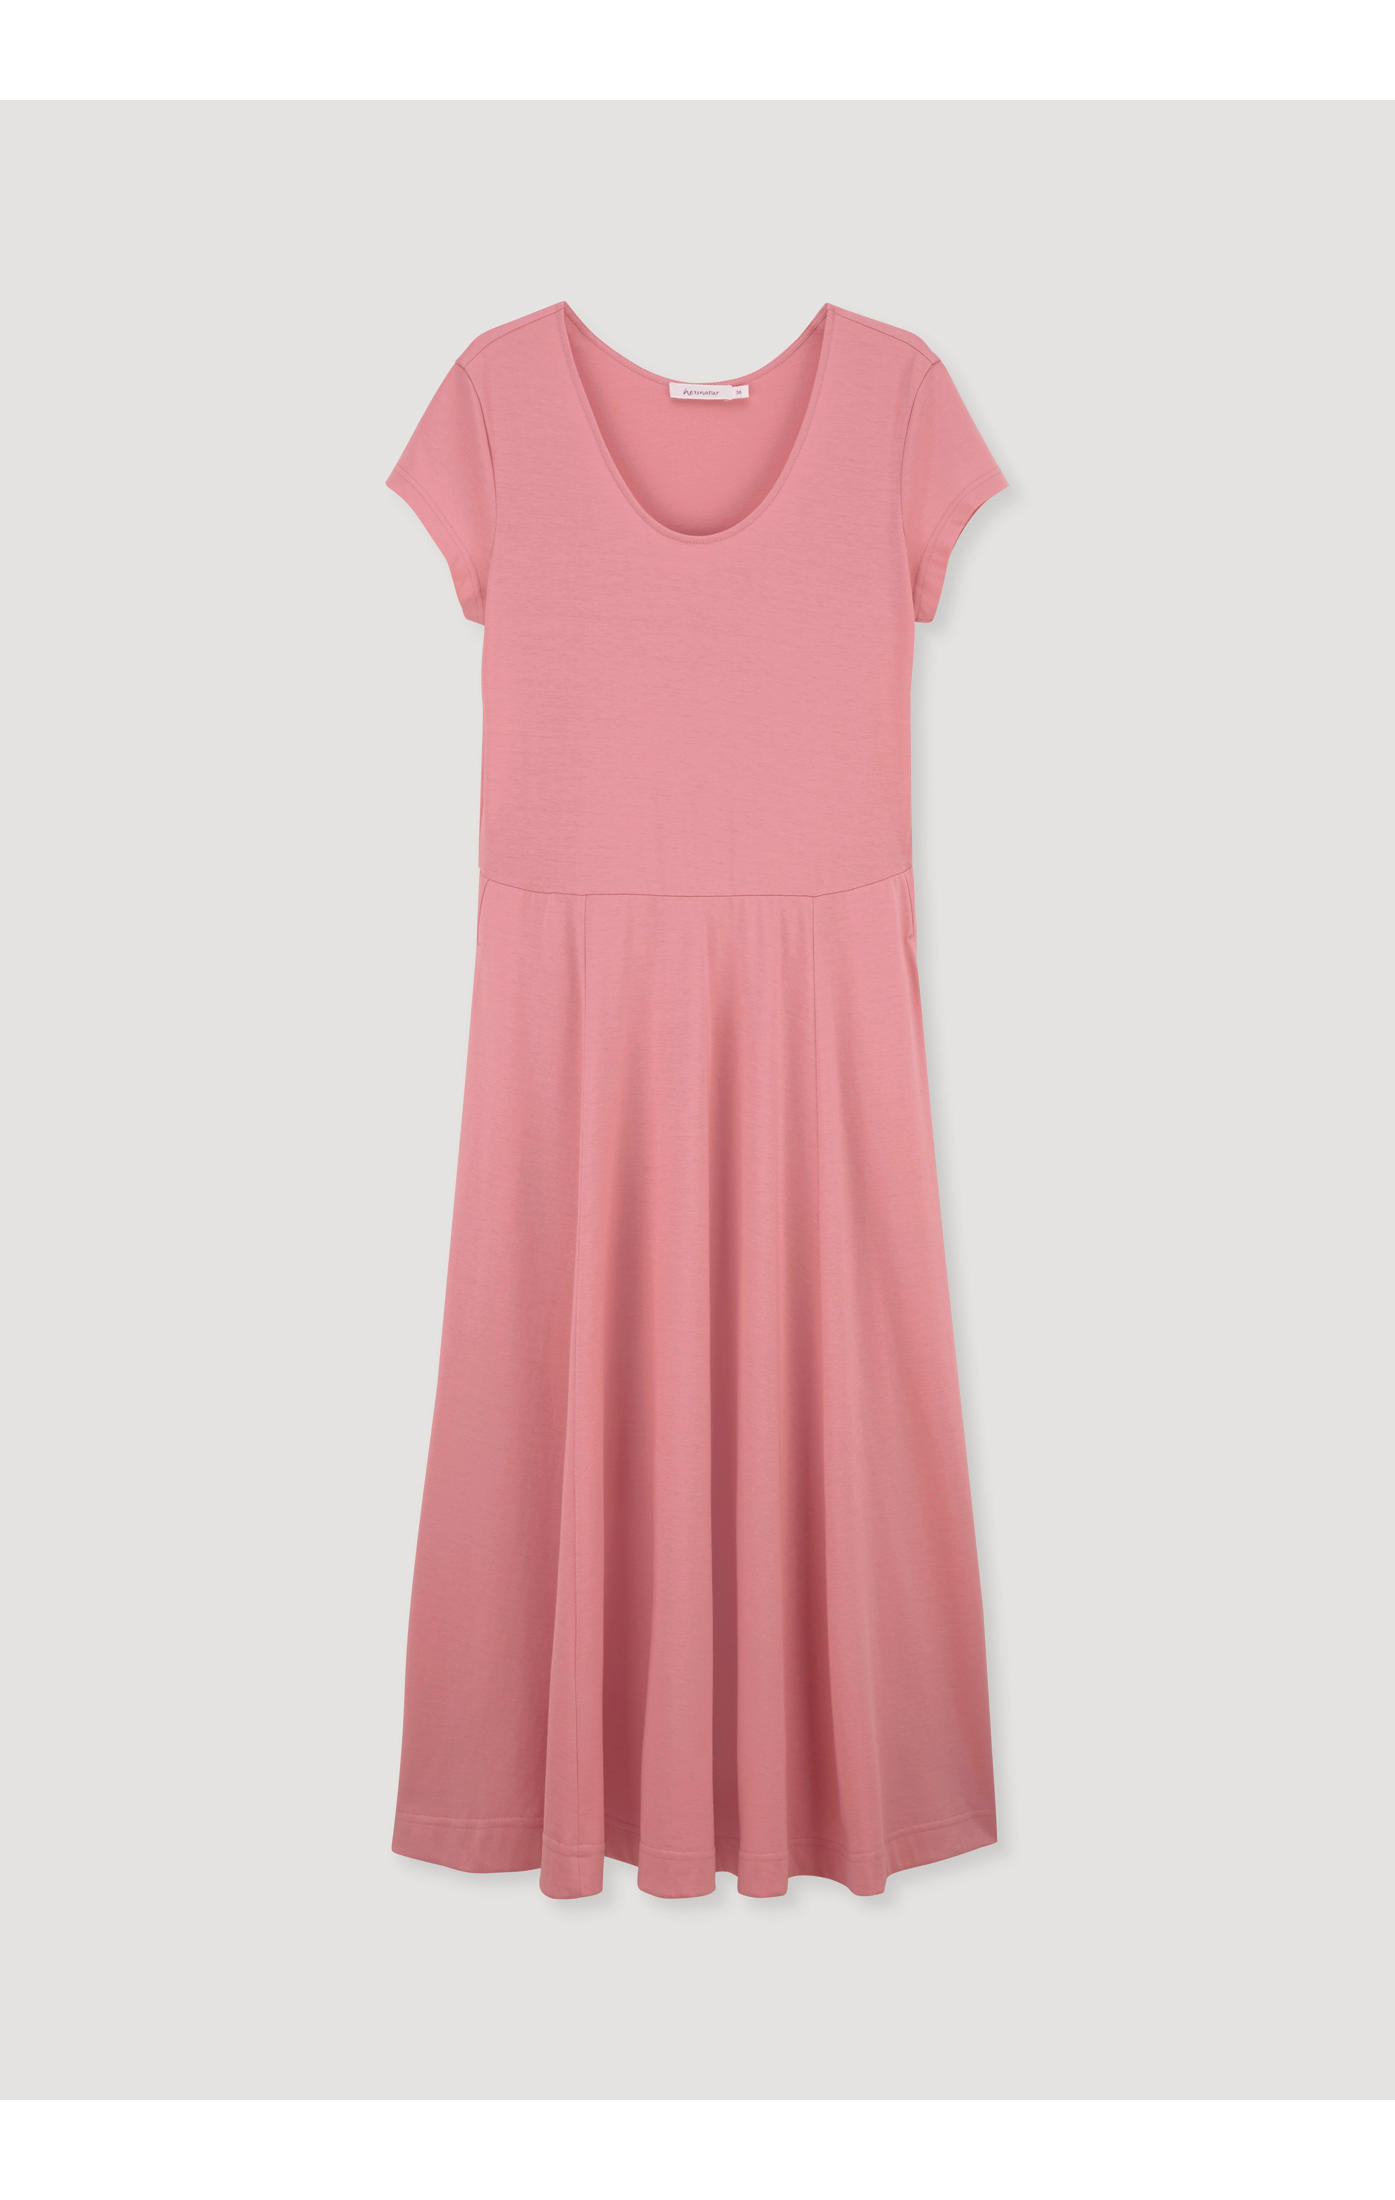 Платье Hessnatur Jersey, цвет sorbet